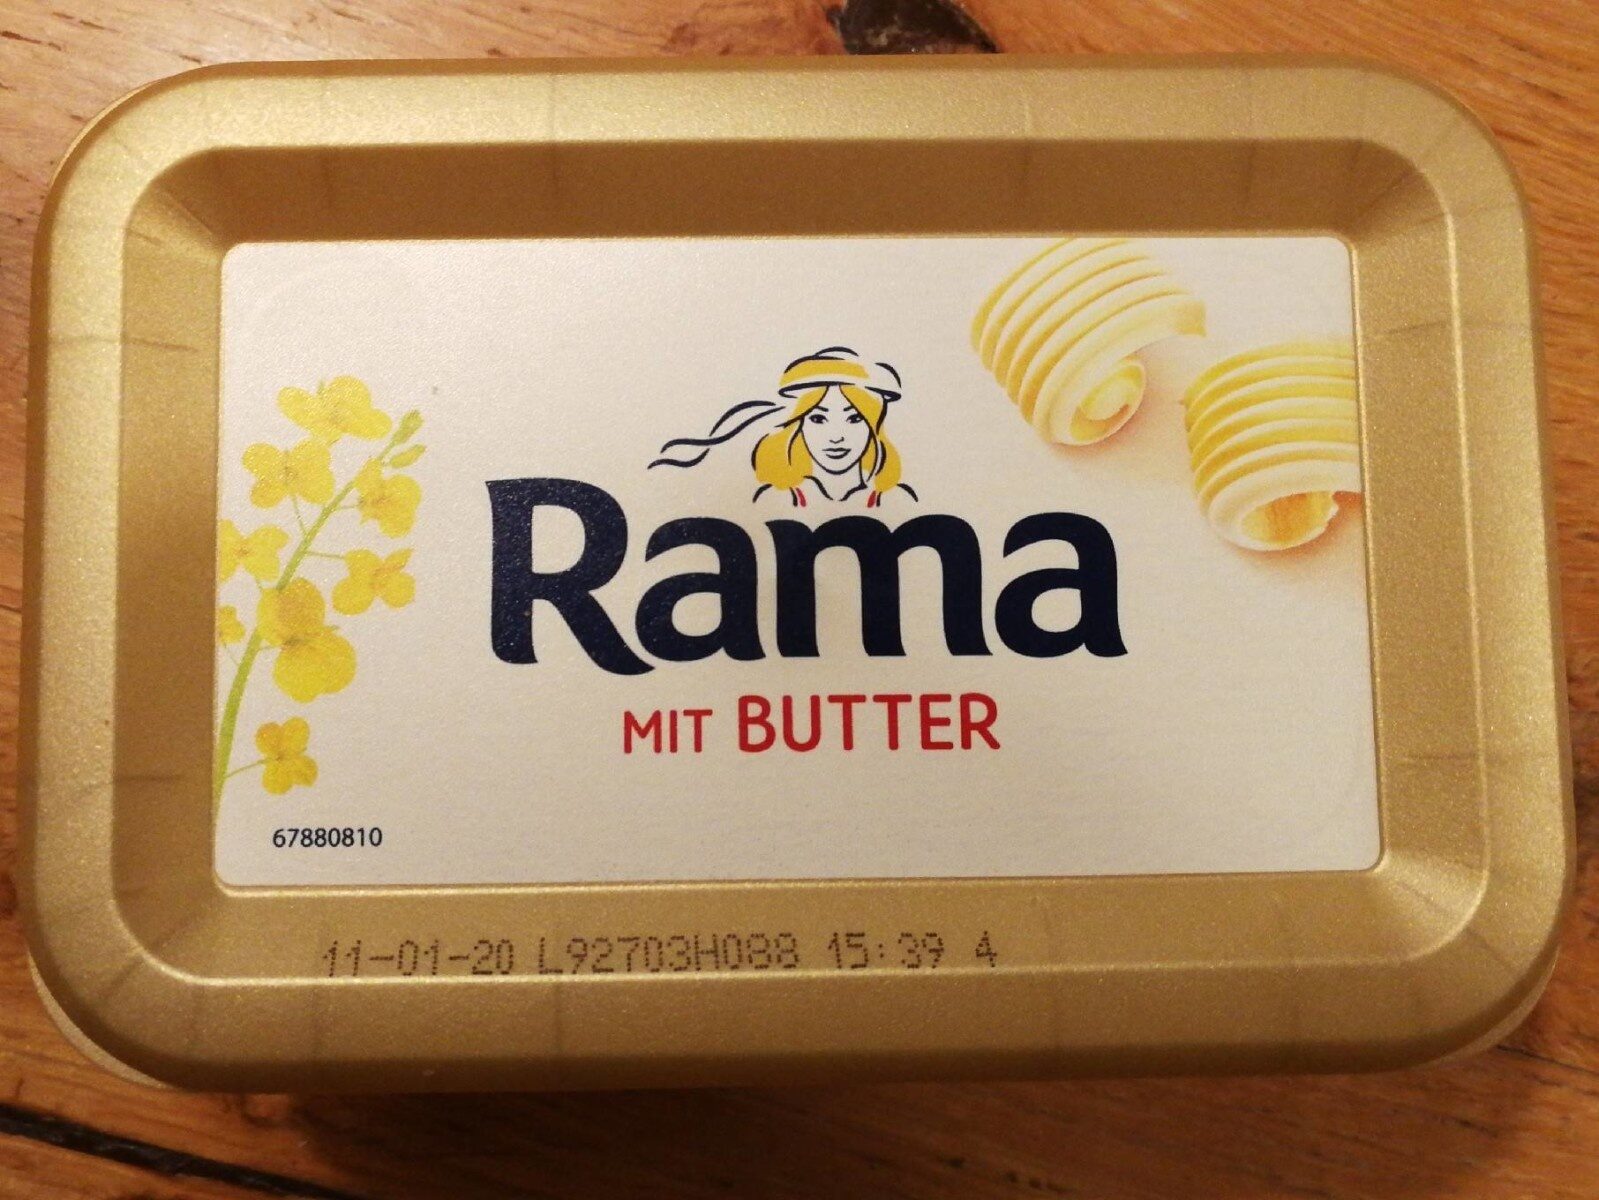 Rama mit Butter - Prodotto - fr